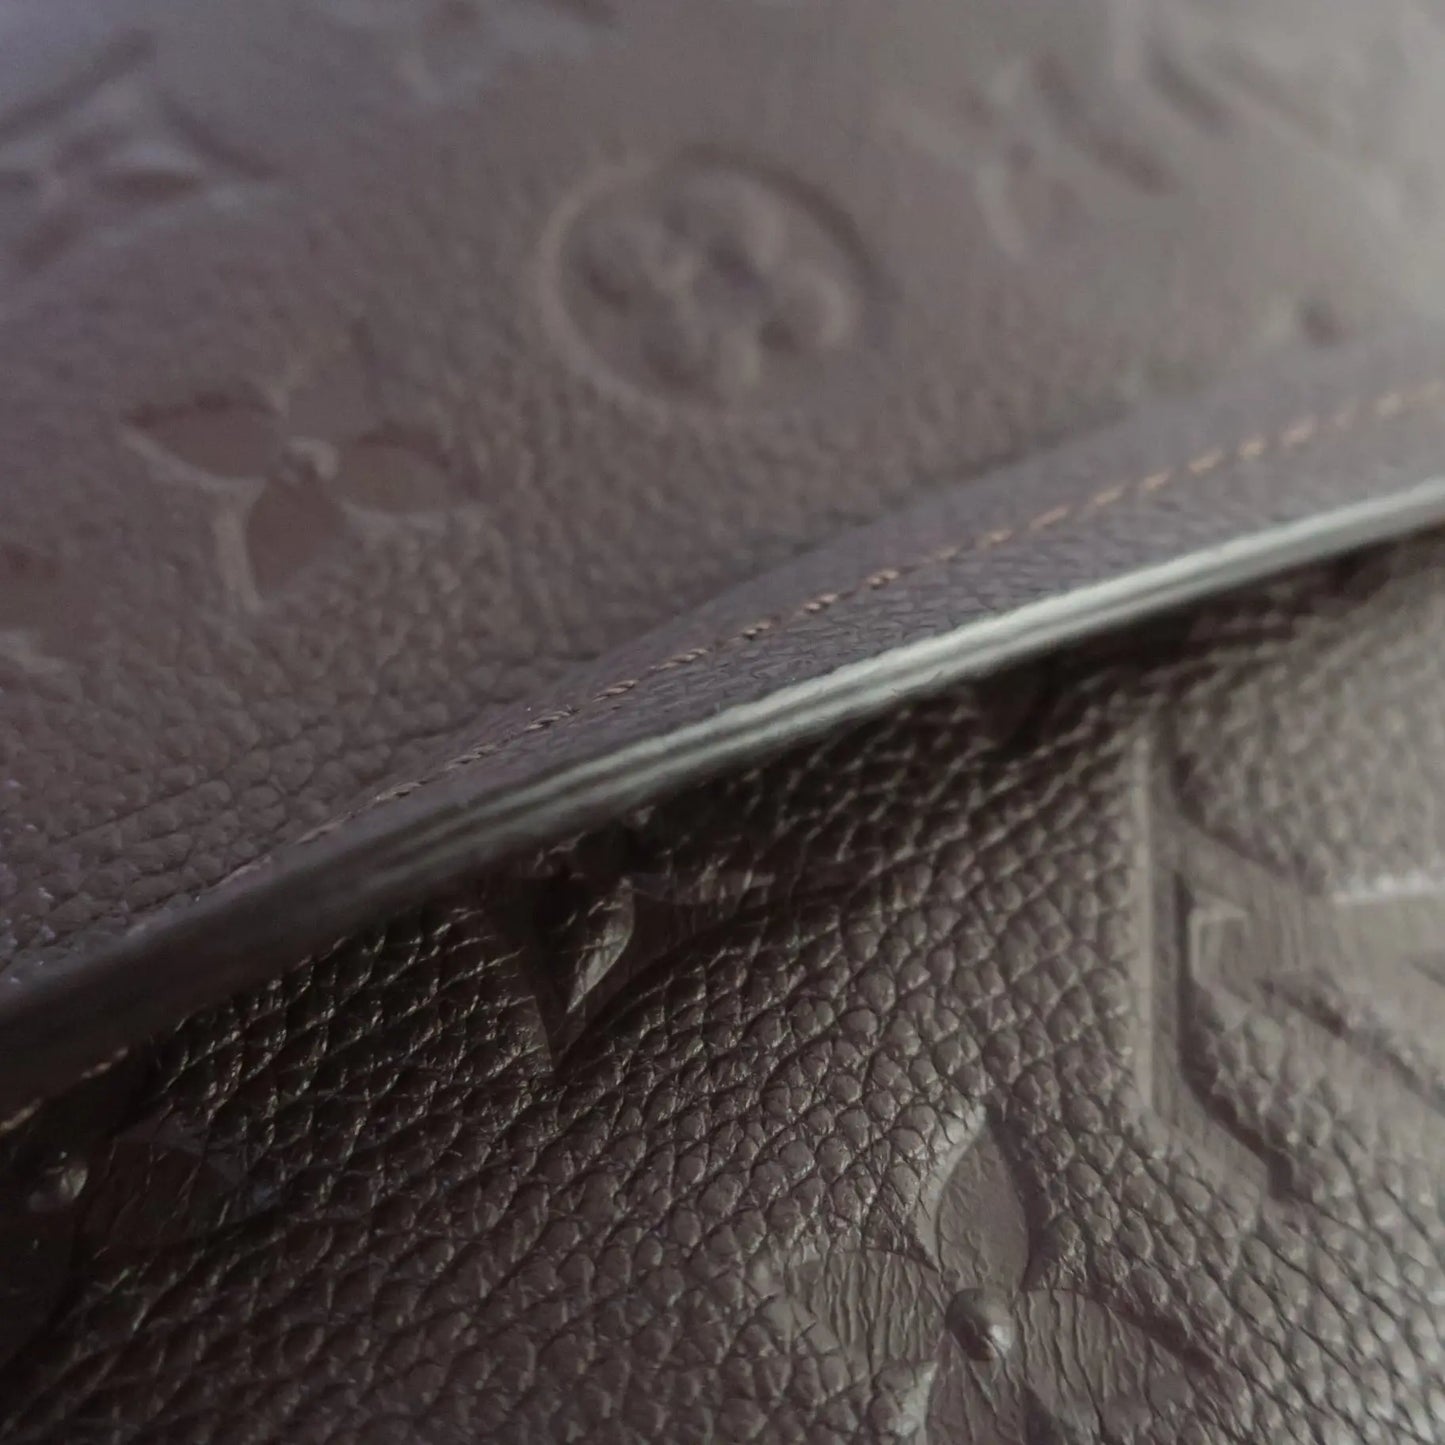 Louis Vuitton Terre Monogram Empreinte Leather Audacieuse PM Bag